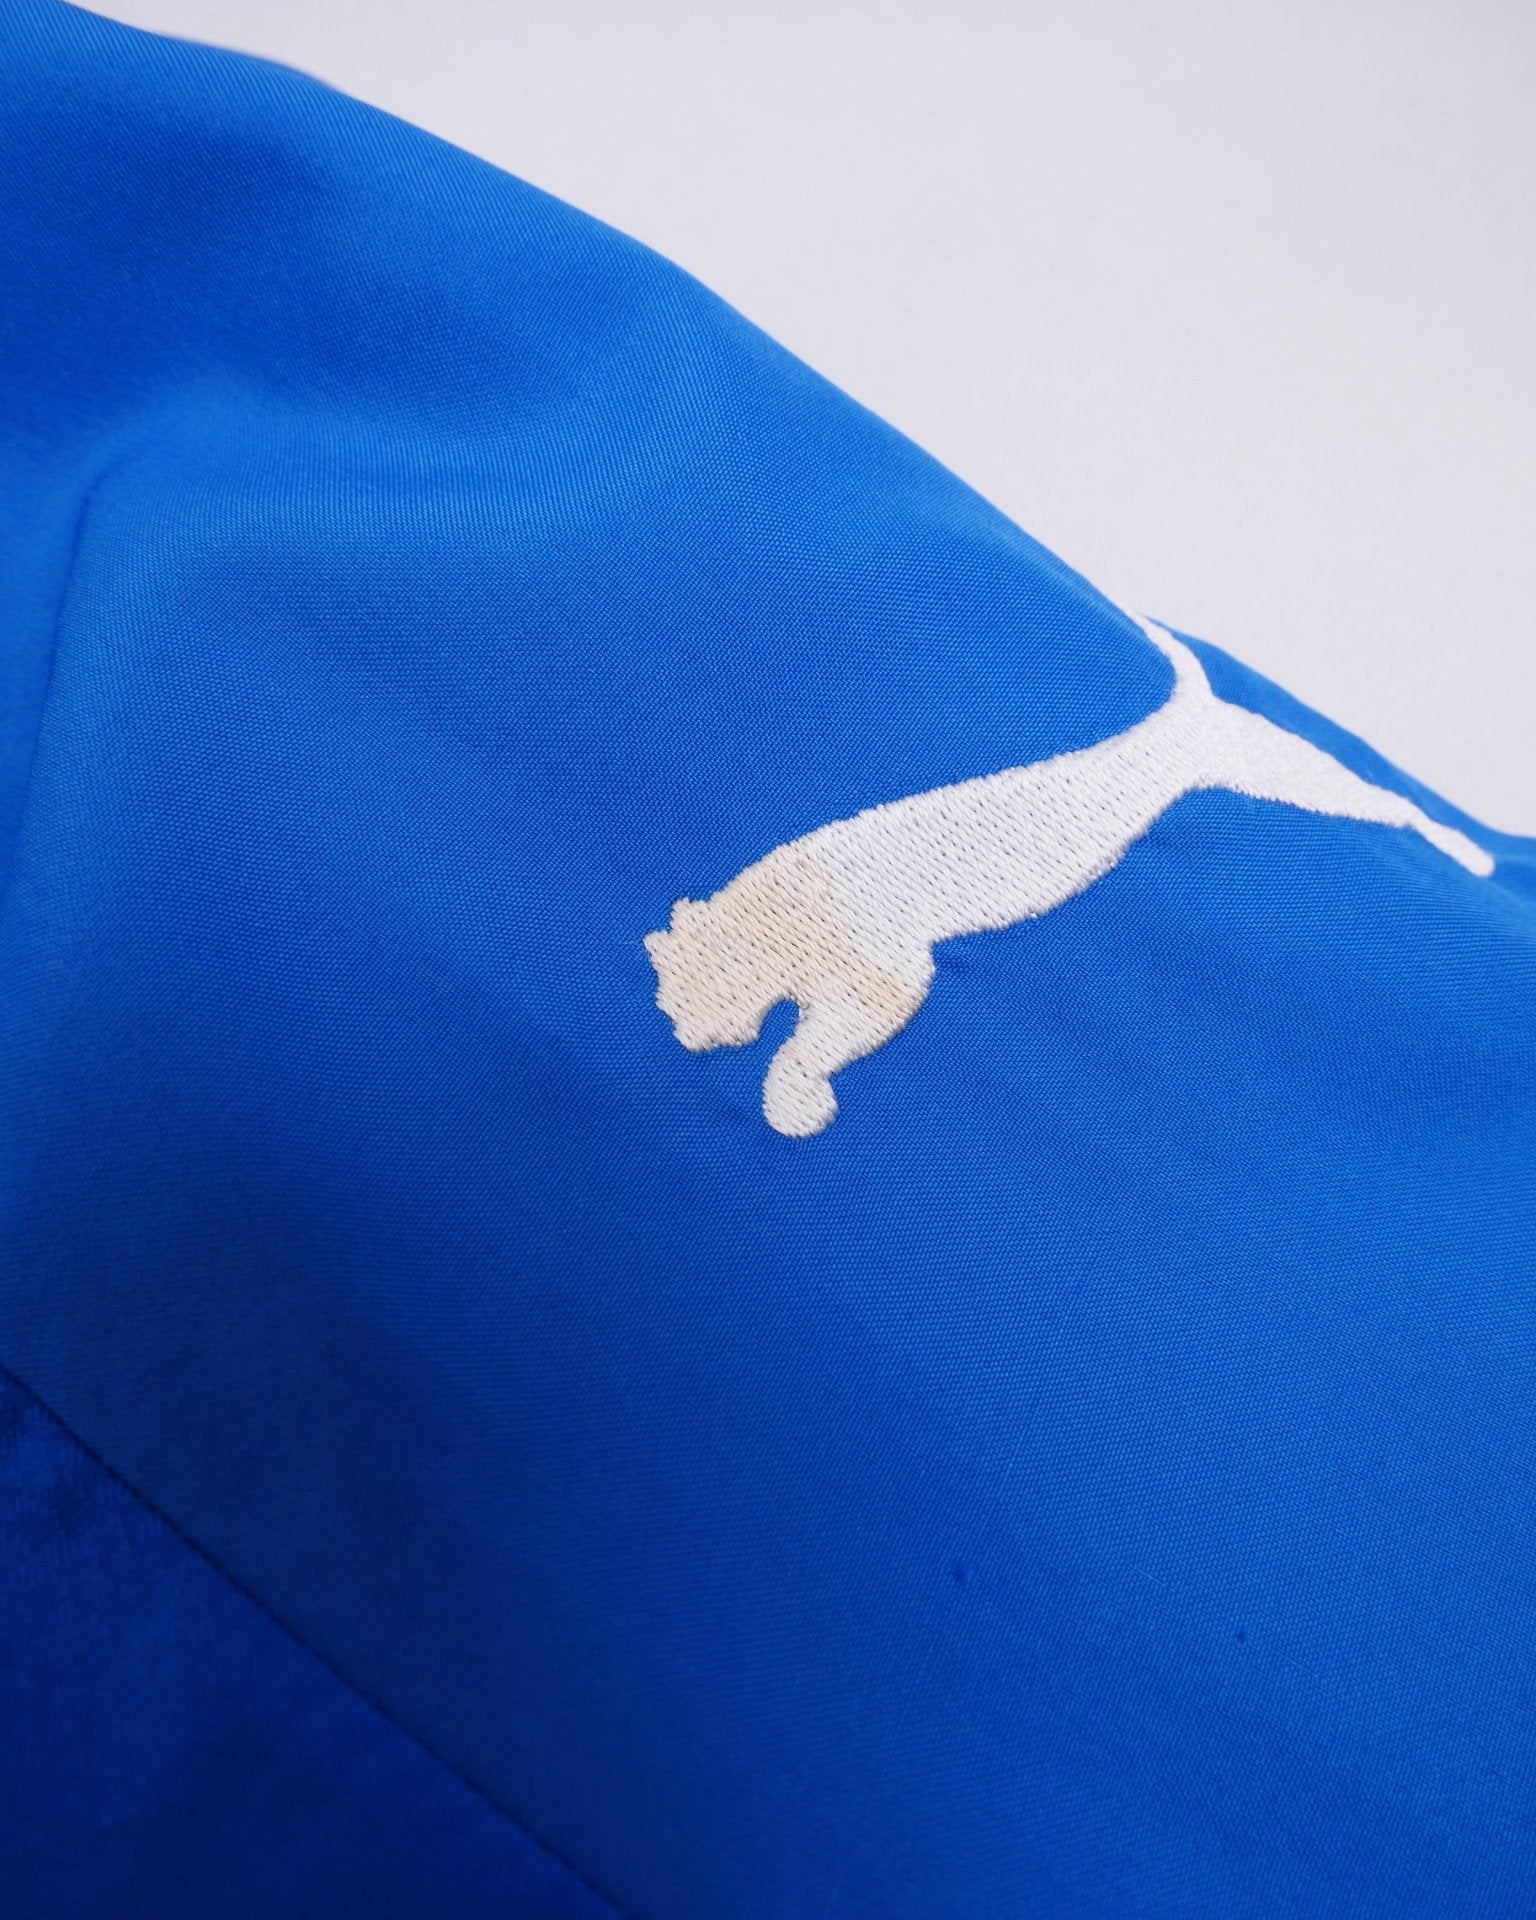 puma Soccer embroidered Logo blue Track Jacket - Peeces